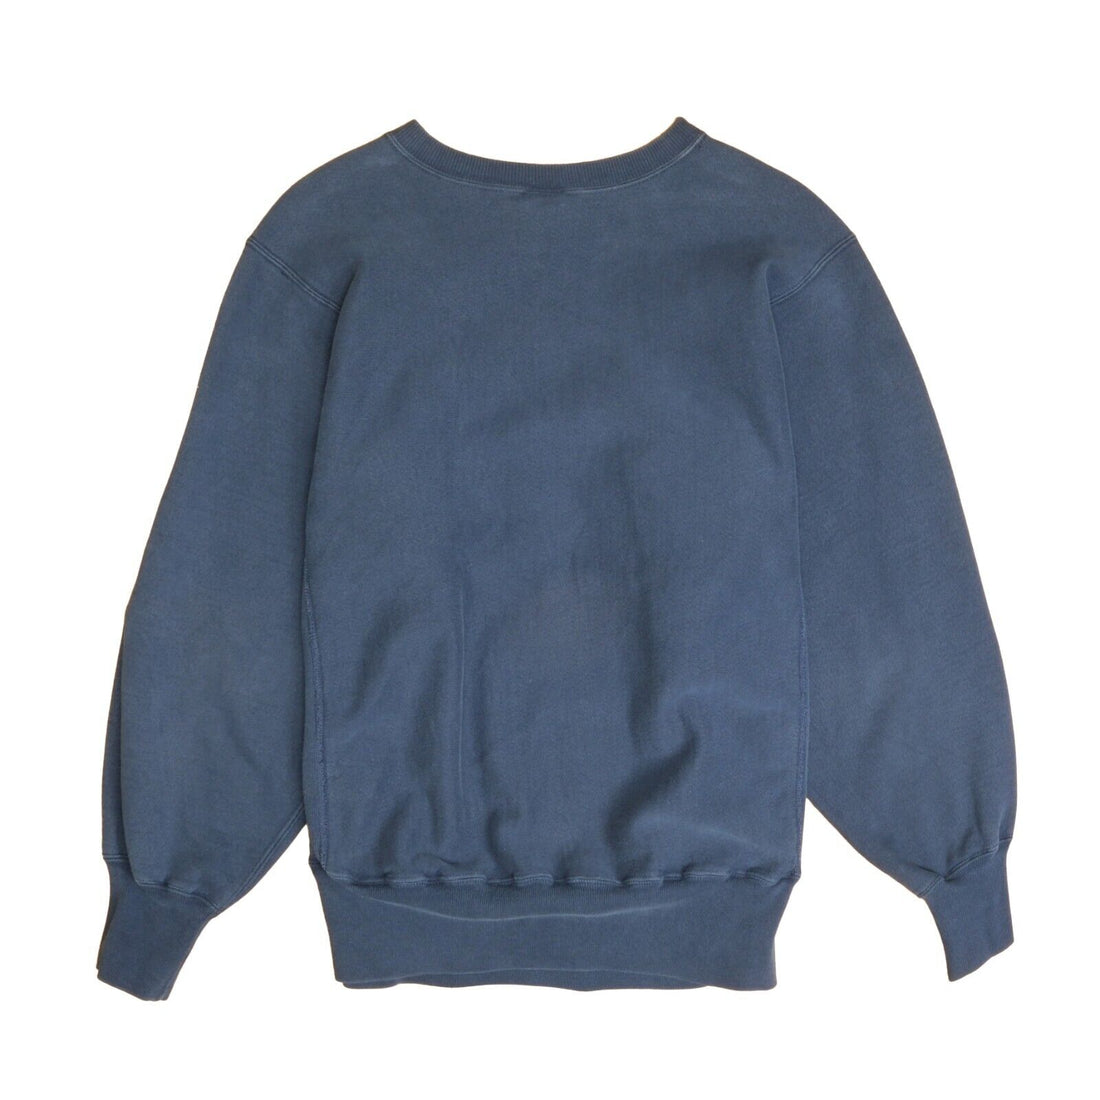 Vintage St John's University Champion Reverse Weave Sweatshirt Size Large 90s